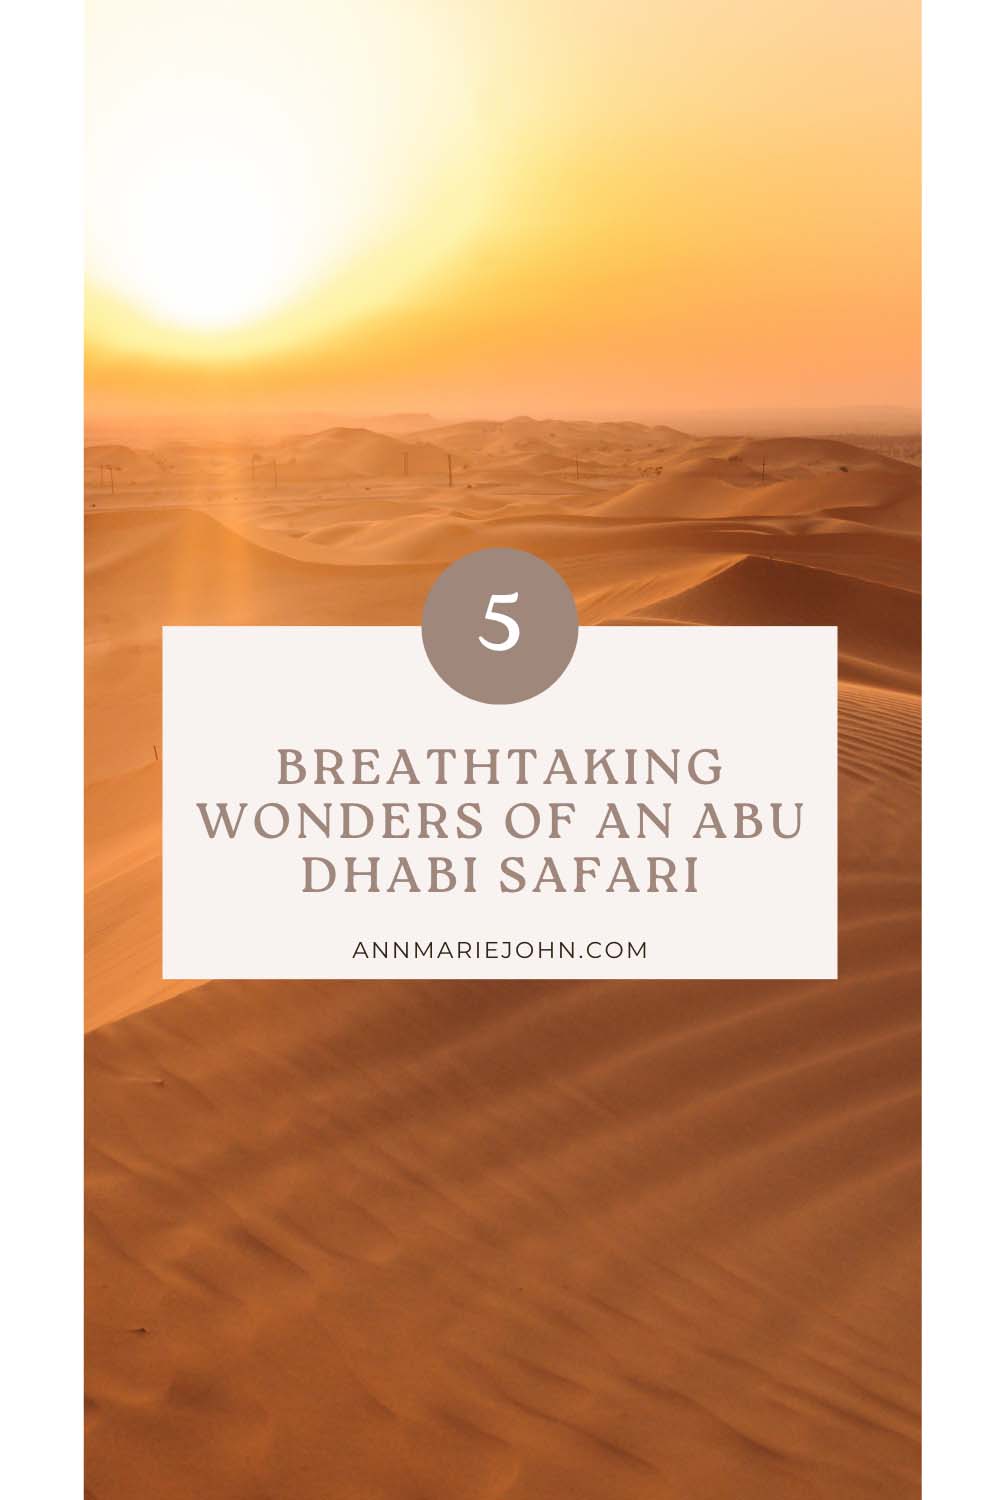 5 Breathtaking Wonders of an Abu Dhabi Safari